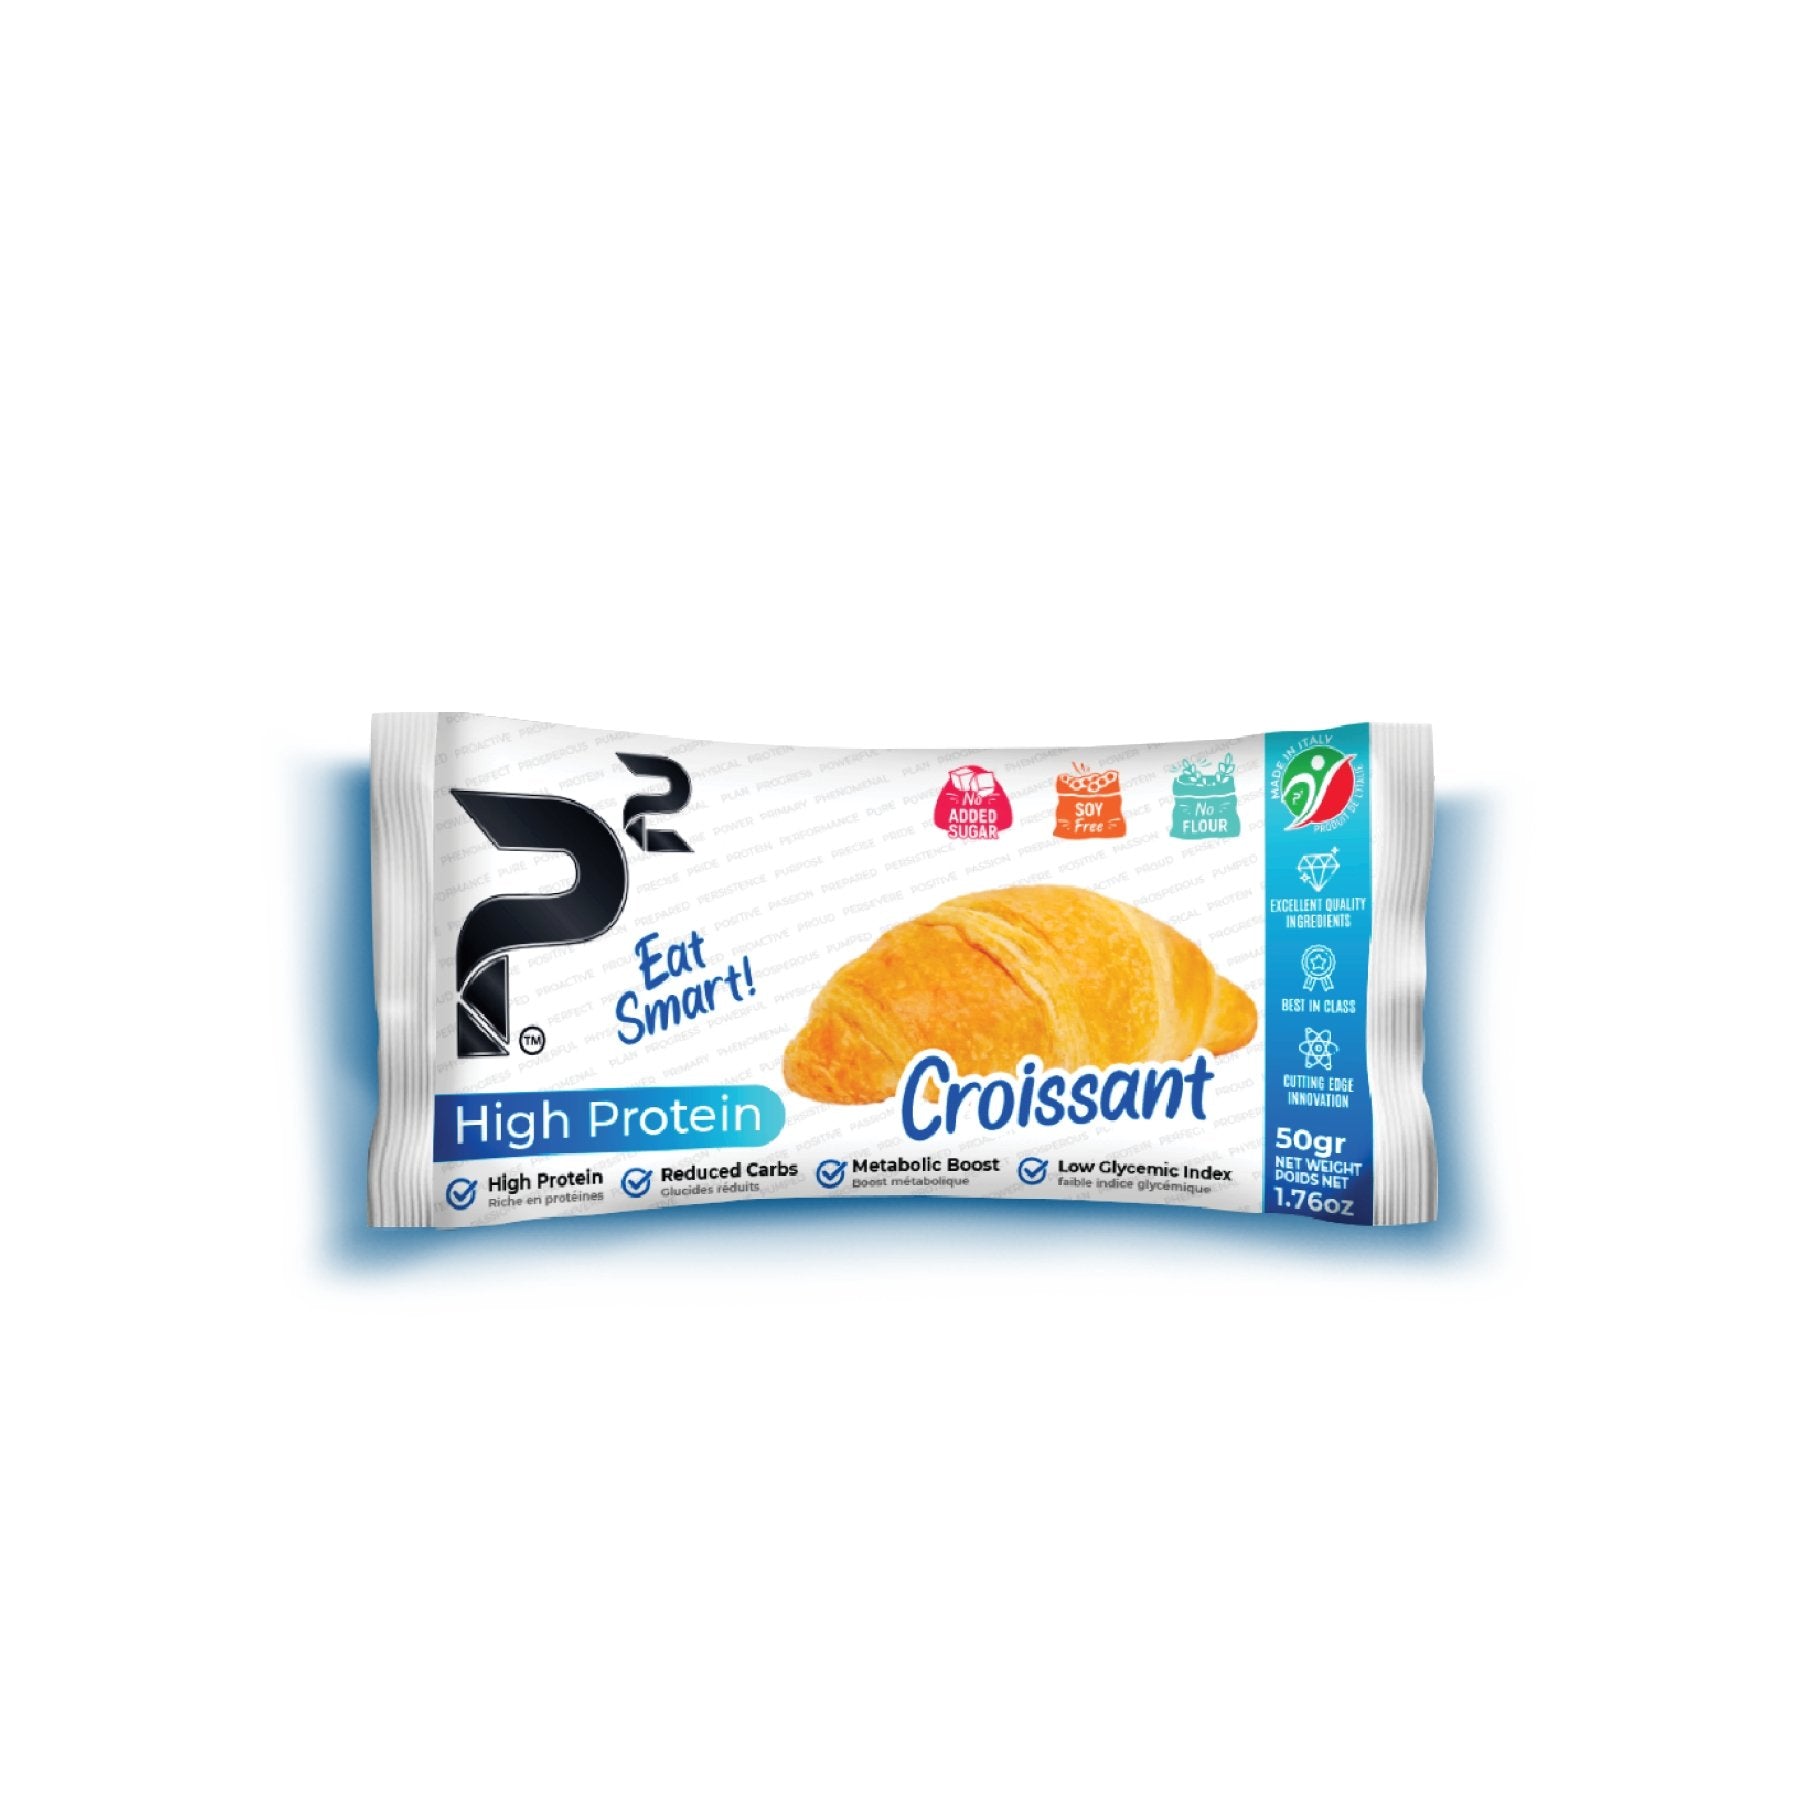 High Protein Croissant 50g